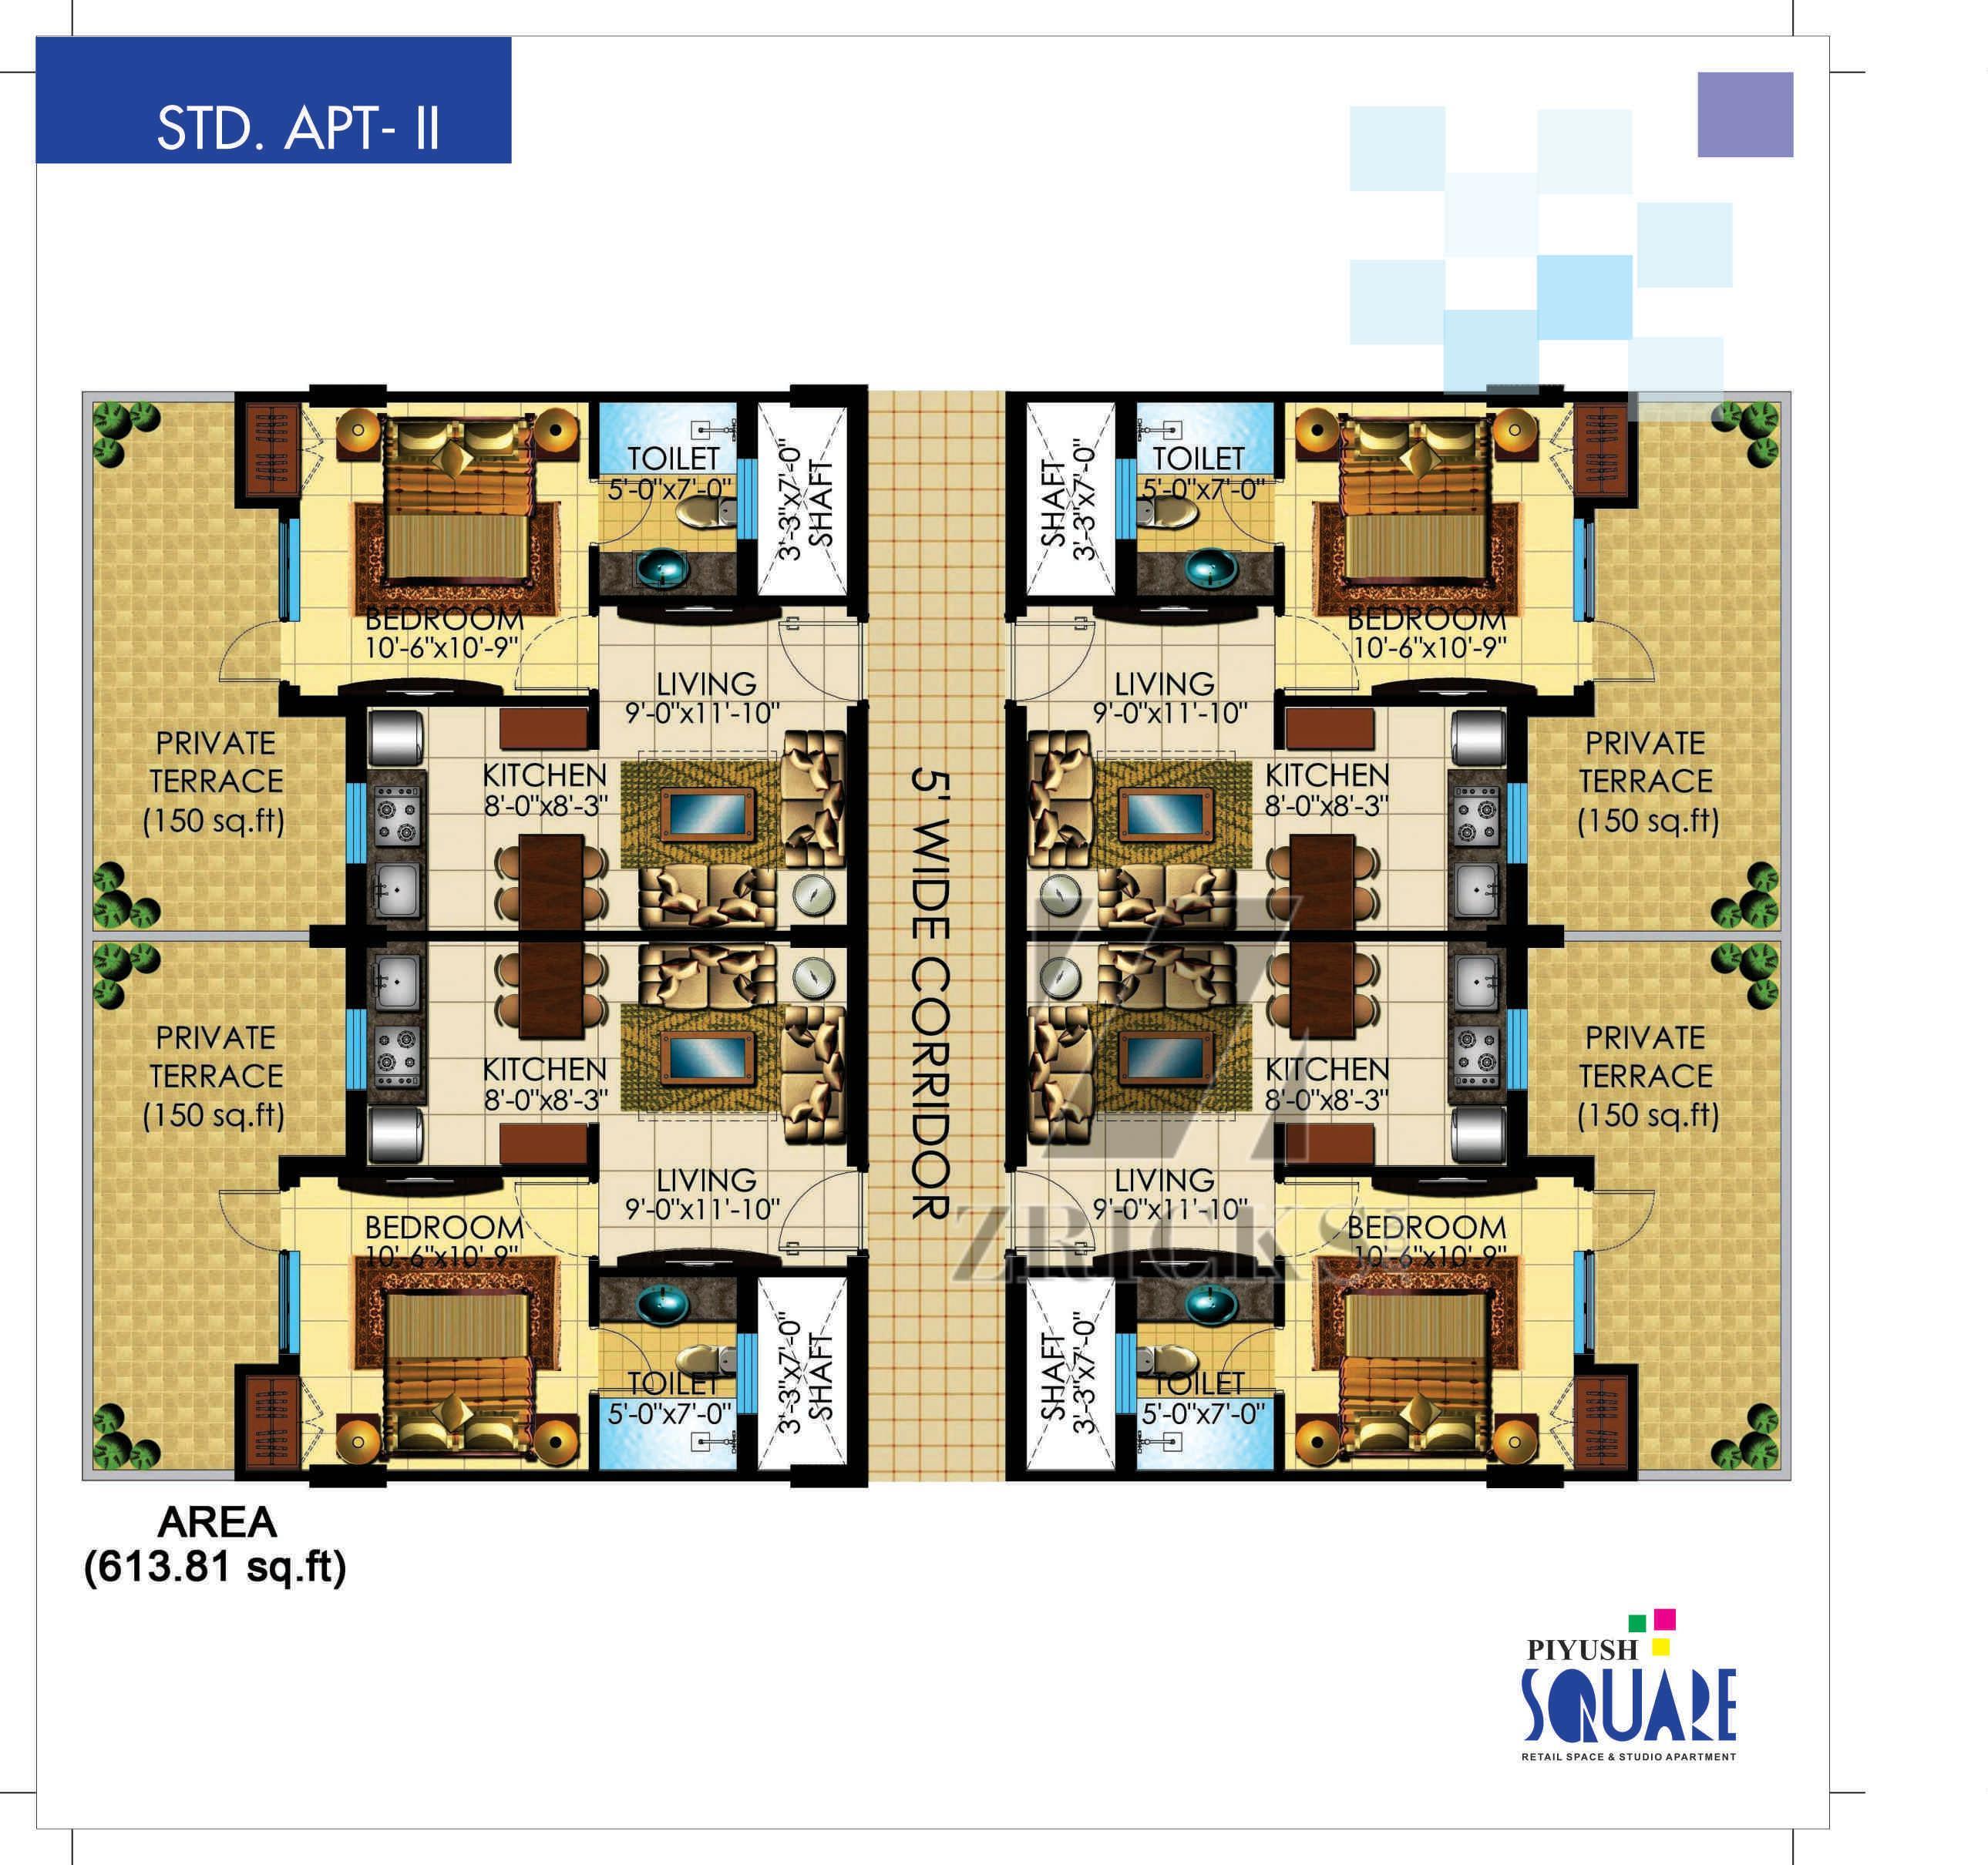 Piyush Square Floor Plan